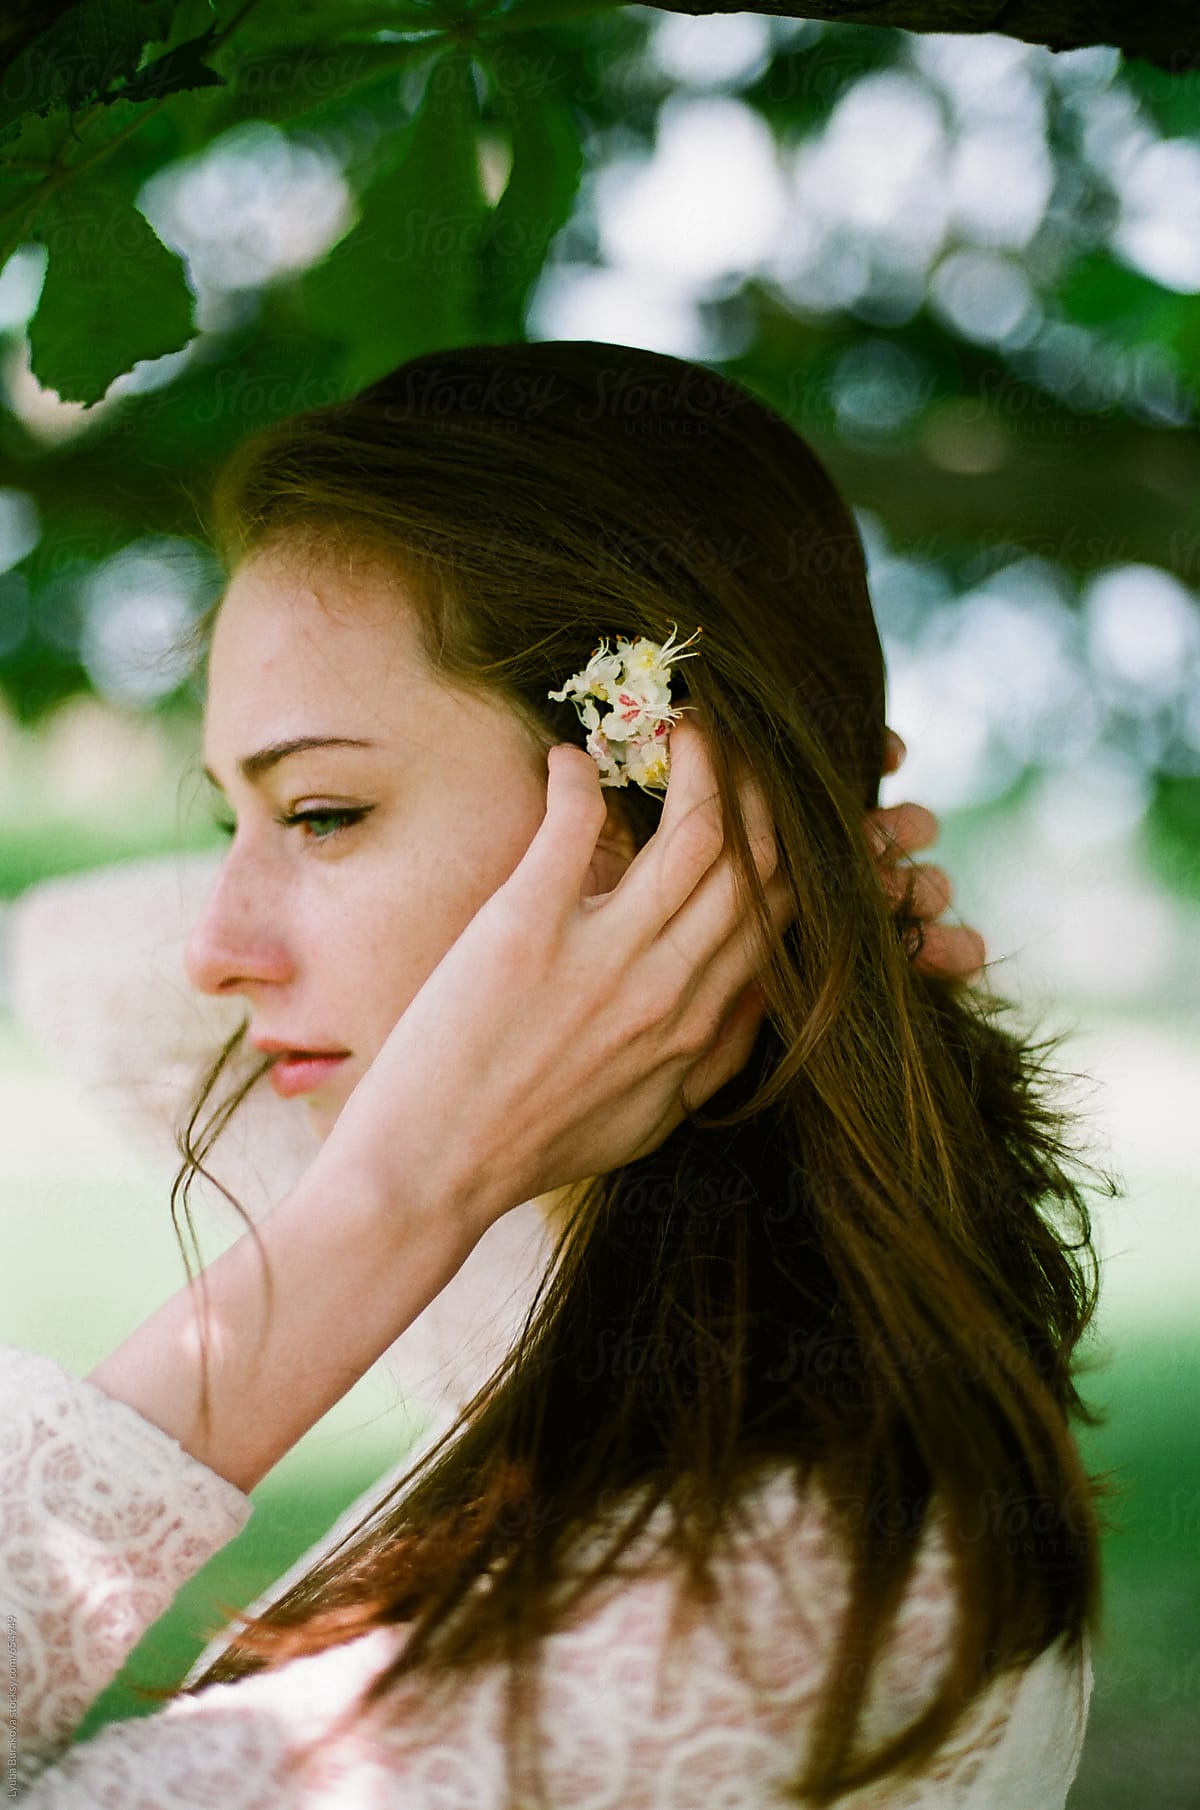 Portrait Of Beautiful Woman With Flower On Her Hair Del Colaborador De Stocksy Amor Burakova 